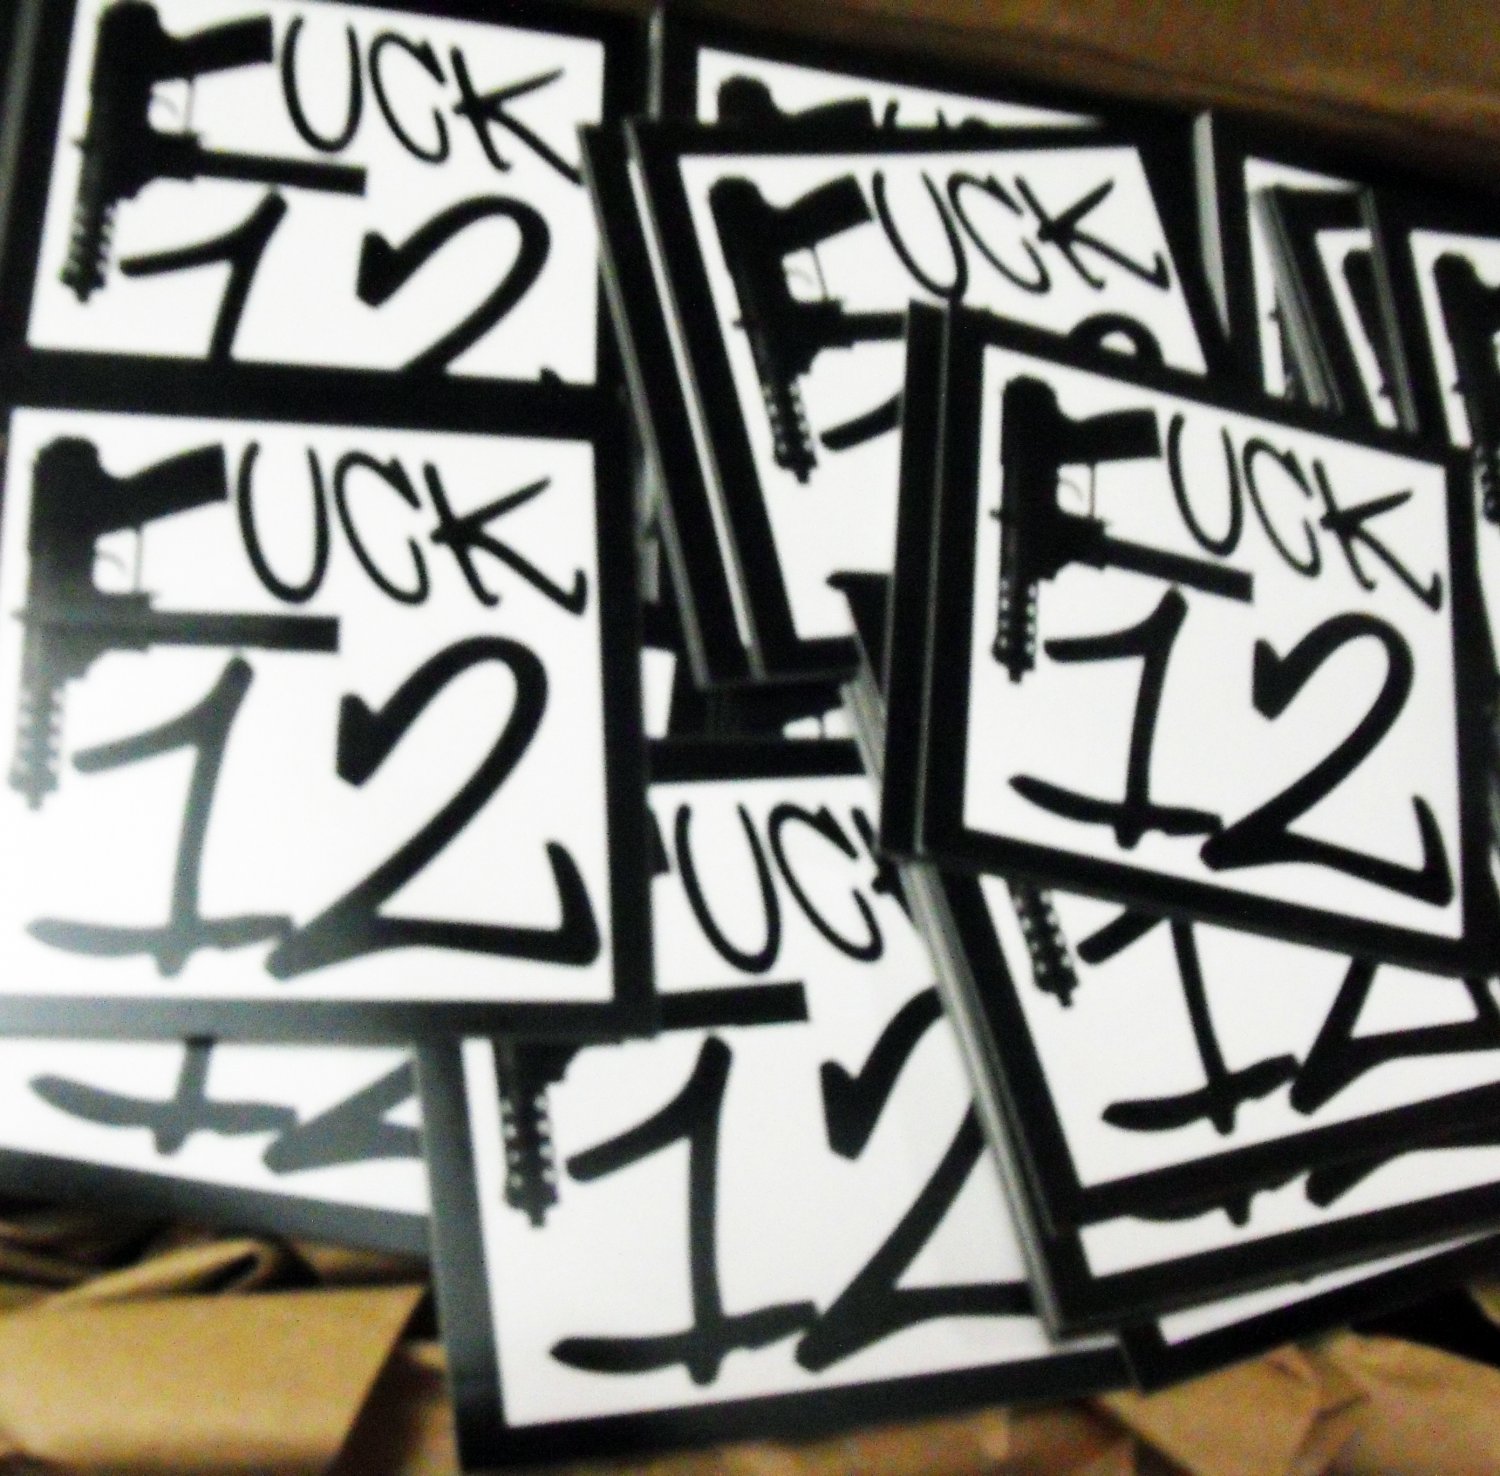 50 FUCK 12 2.5" x 2.5" stickers